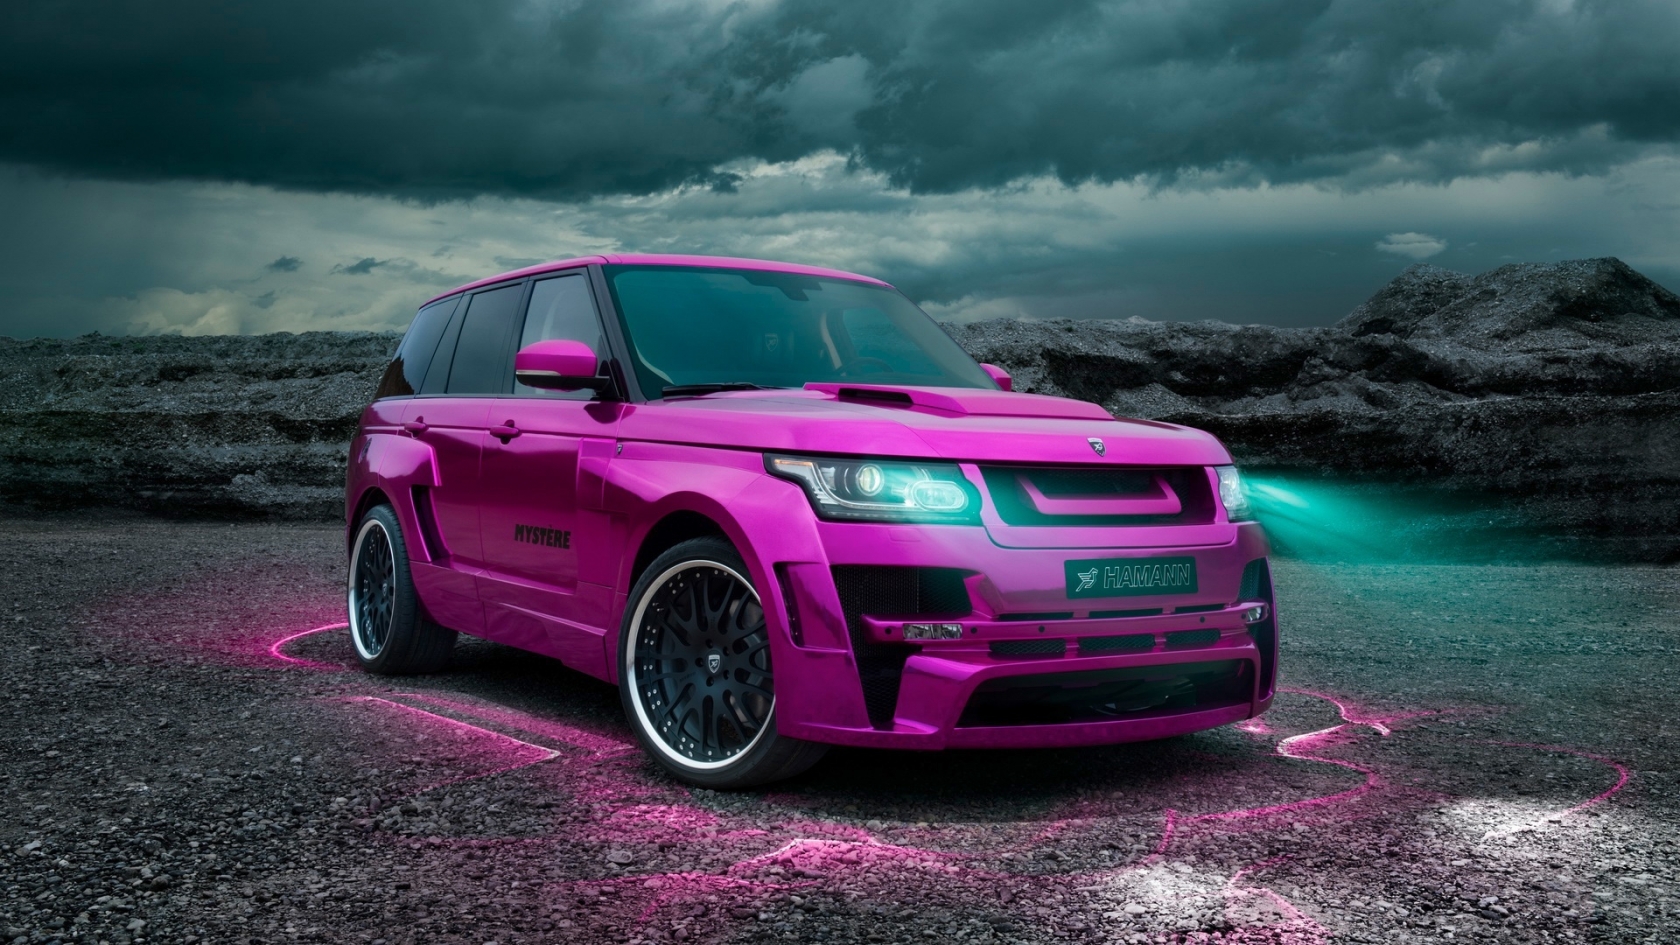 Pink Range Rover Vogue 2013 for 1680 x 945 HDTV resolution